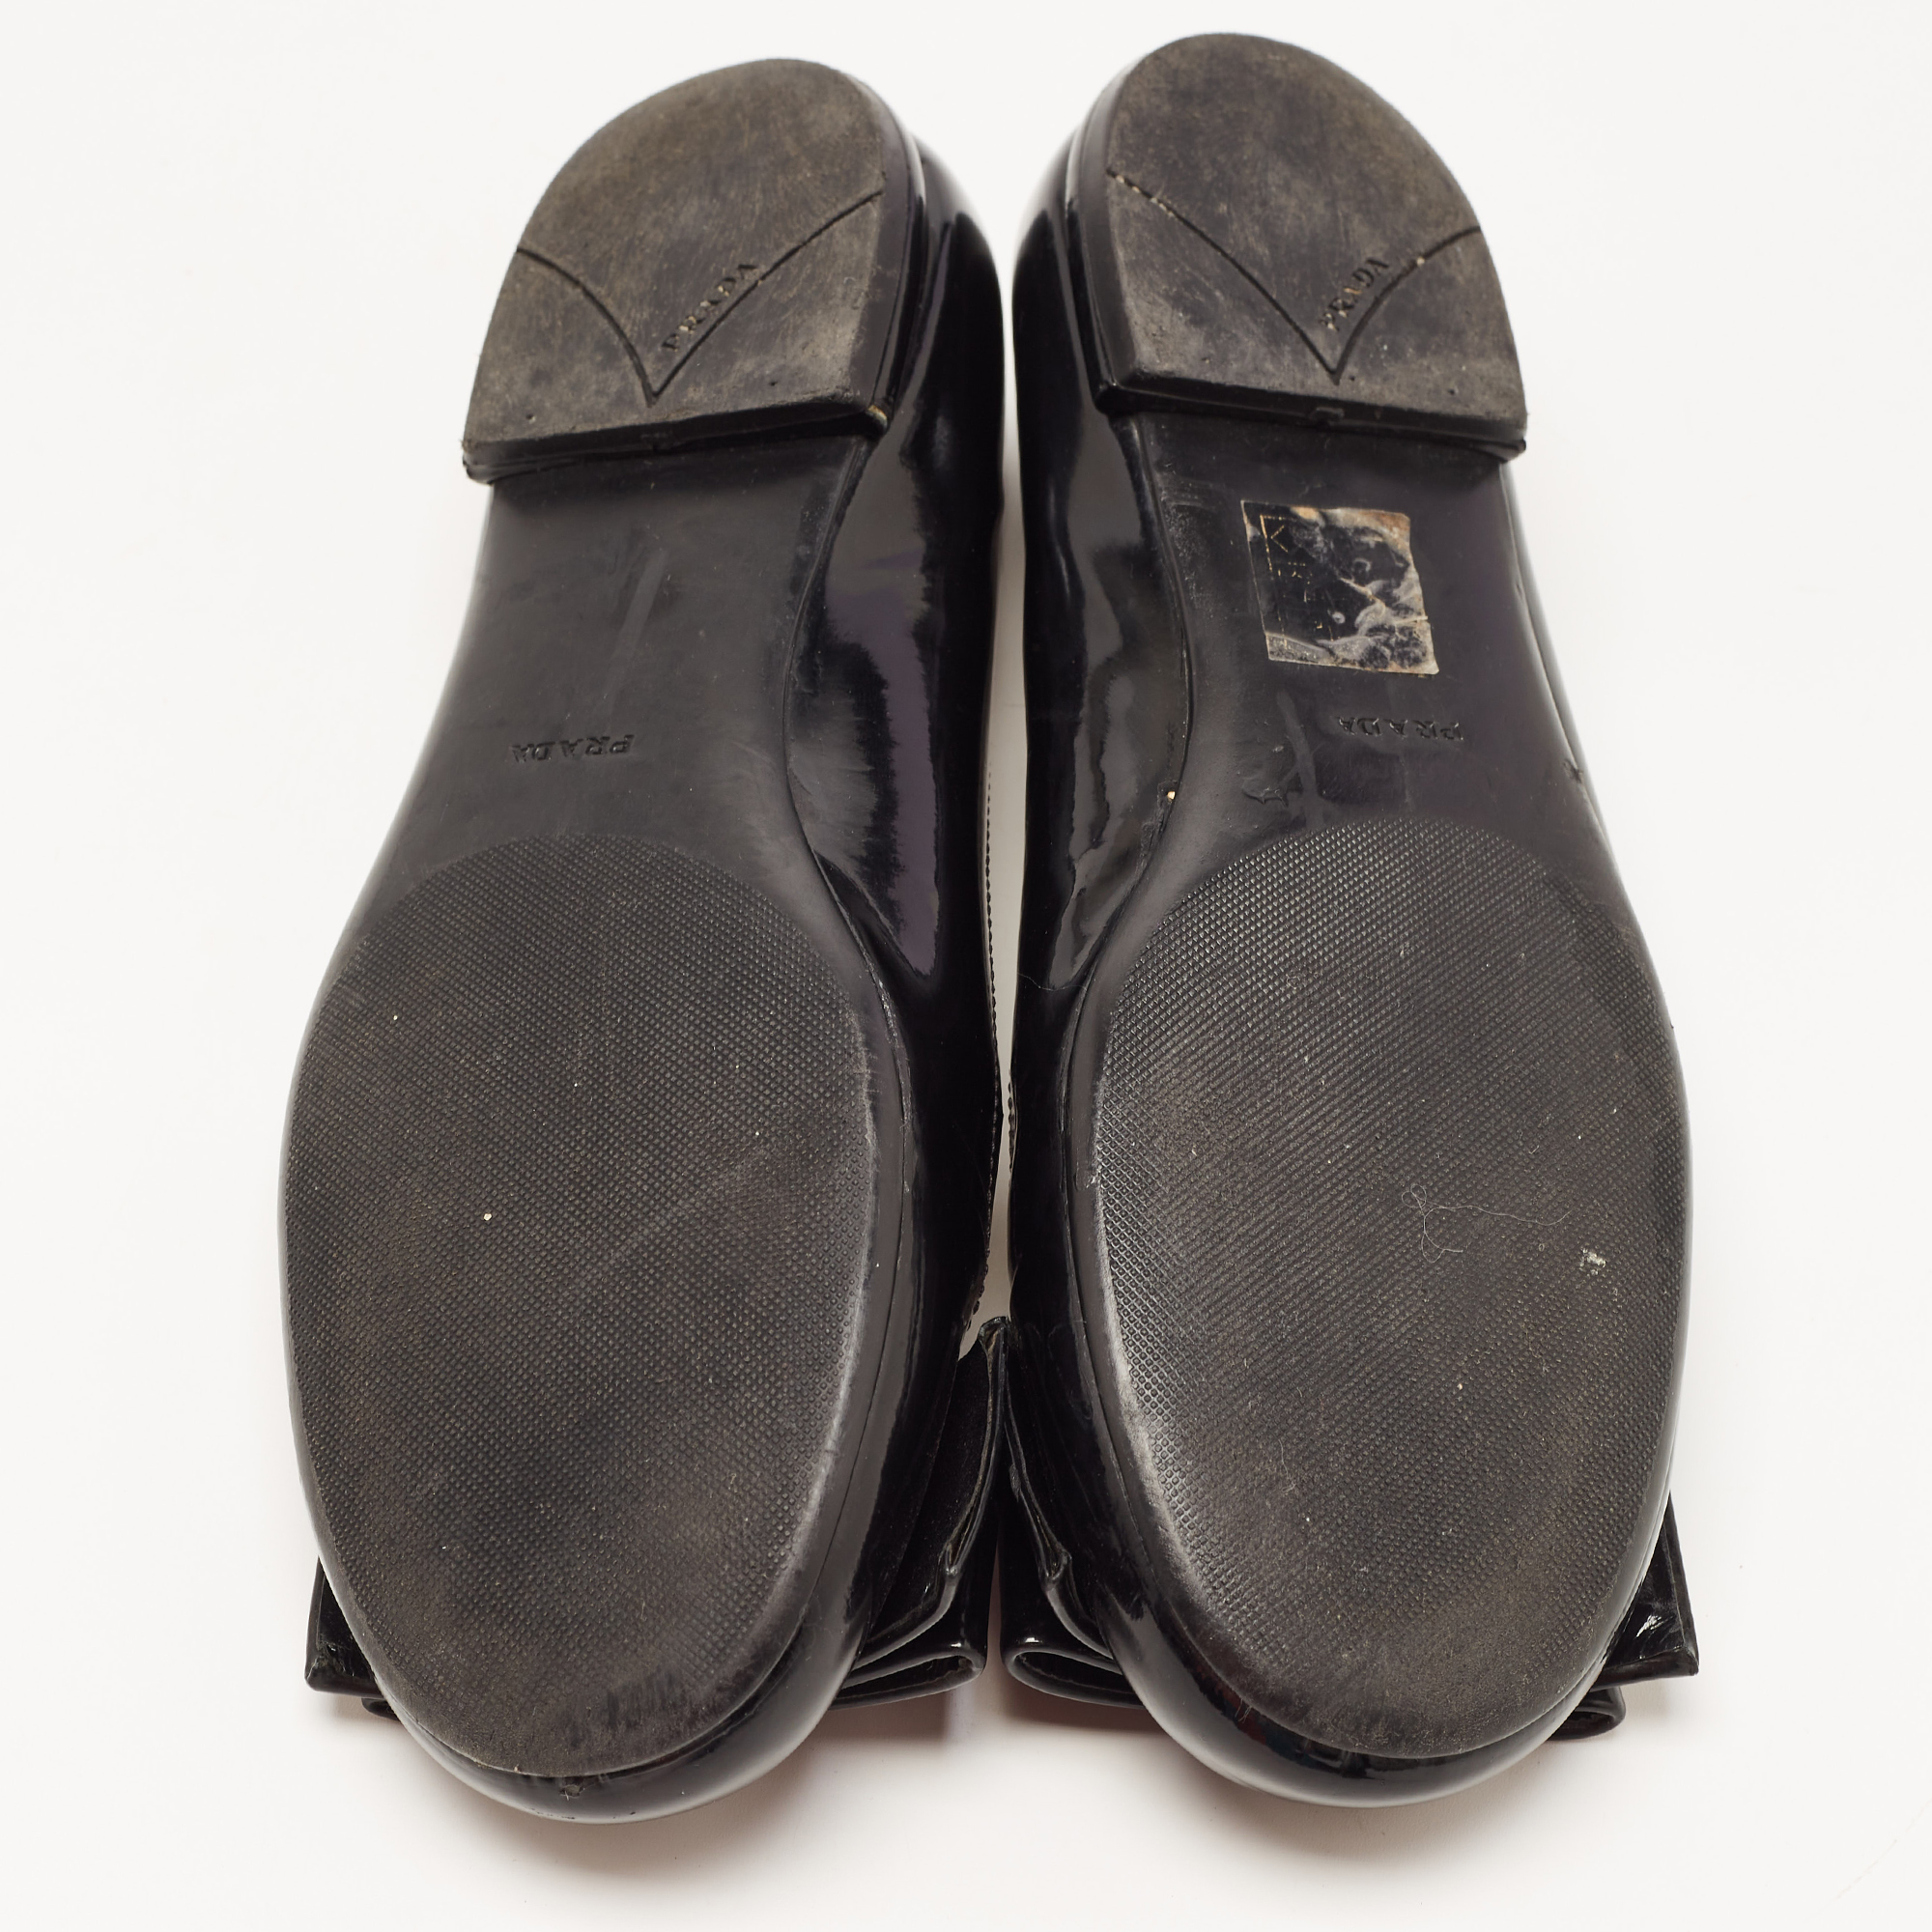 Prada Black Patent Leather Bow Ballet Flats Size 35